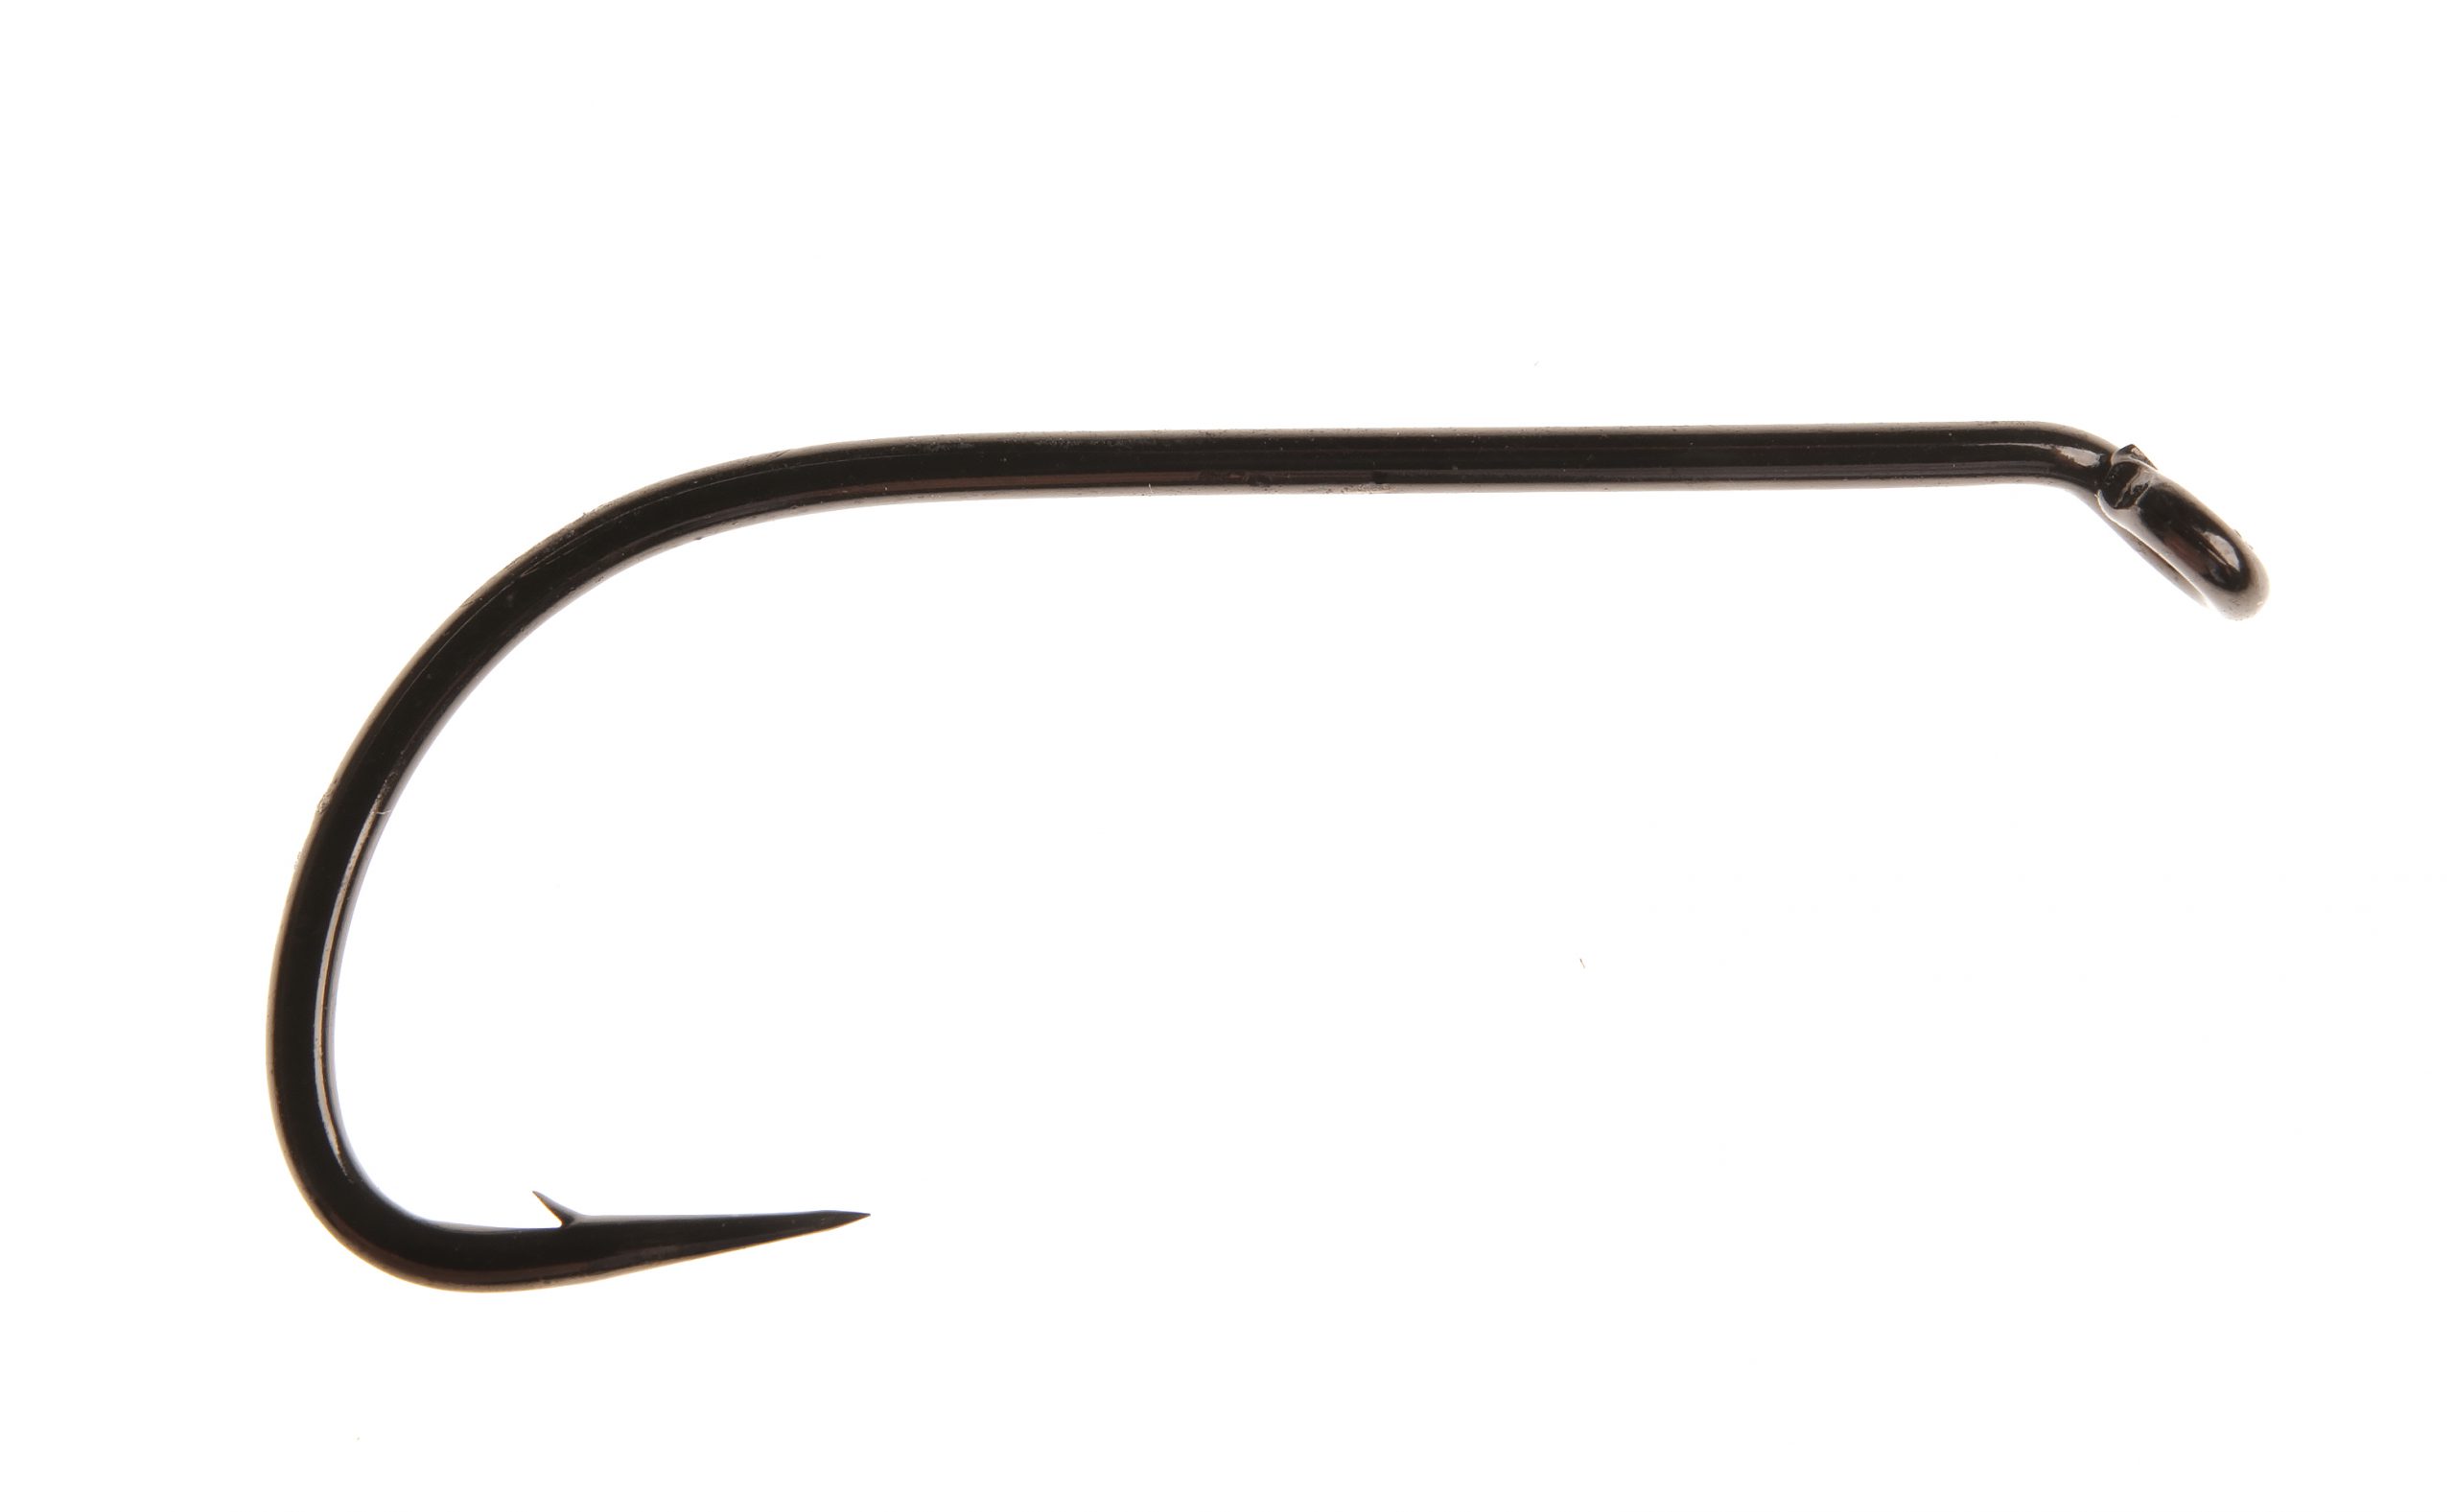 Ahrex FW570 #8 Dry Long - Ahrex Hooks